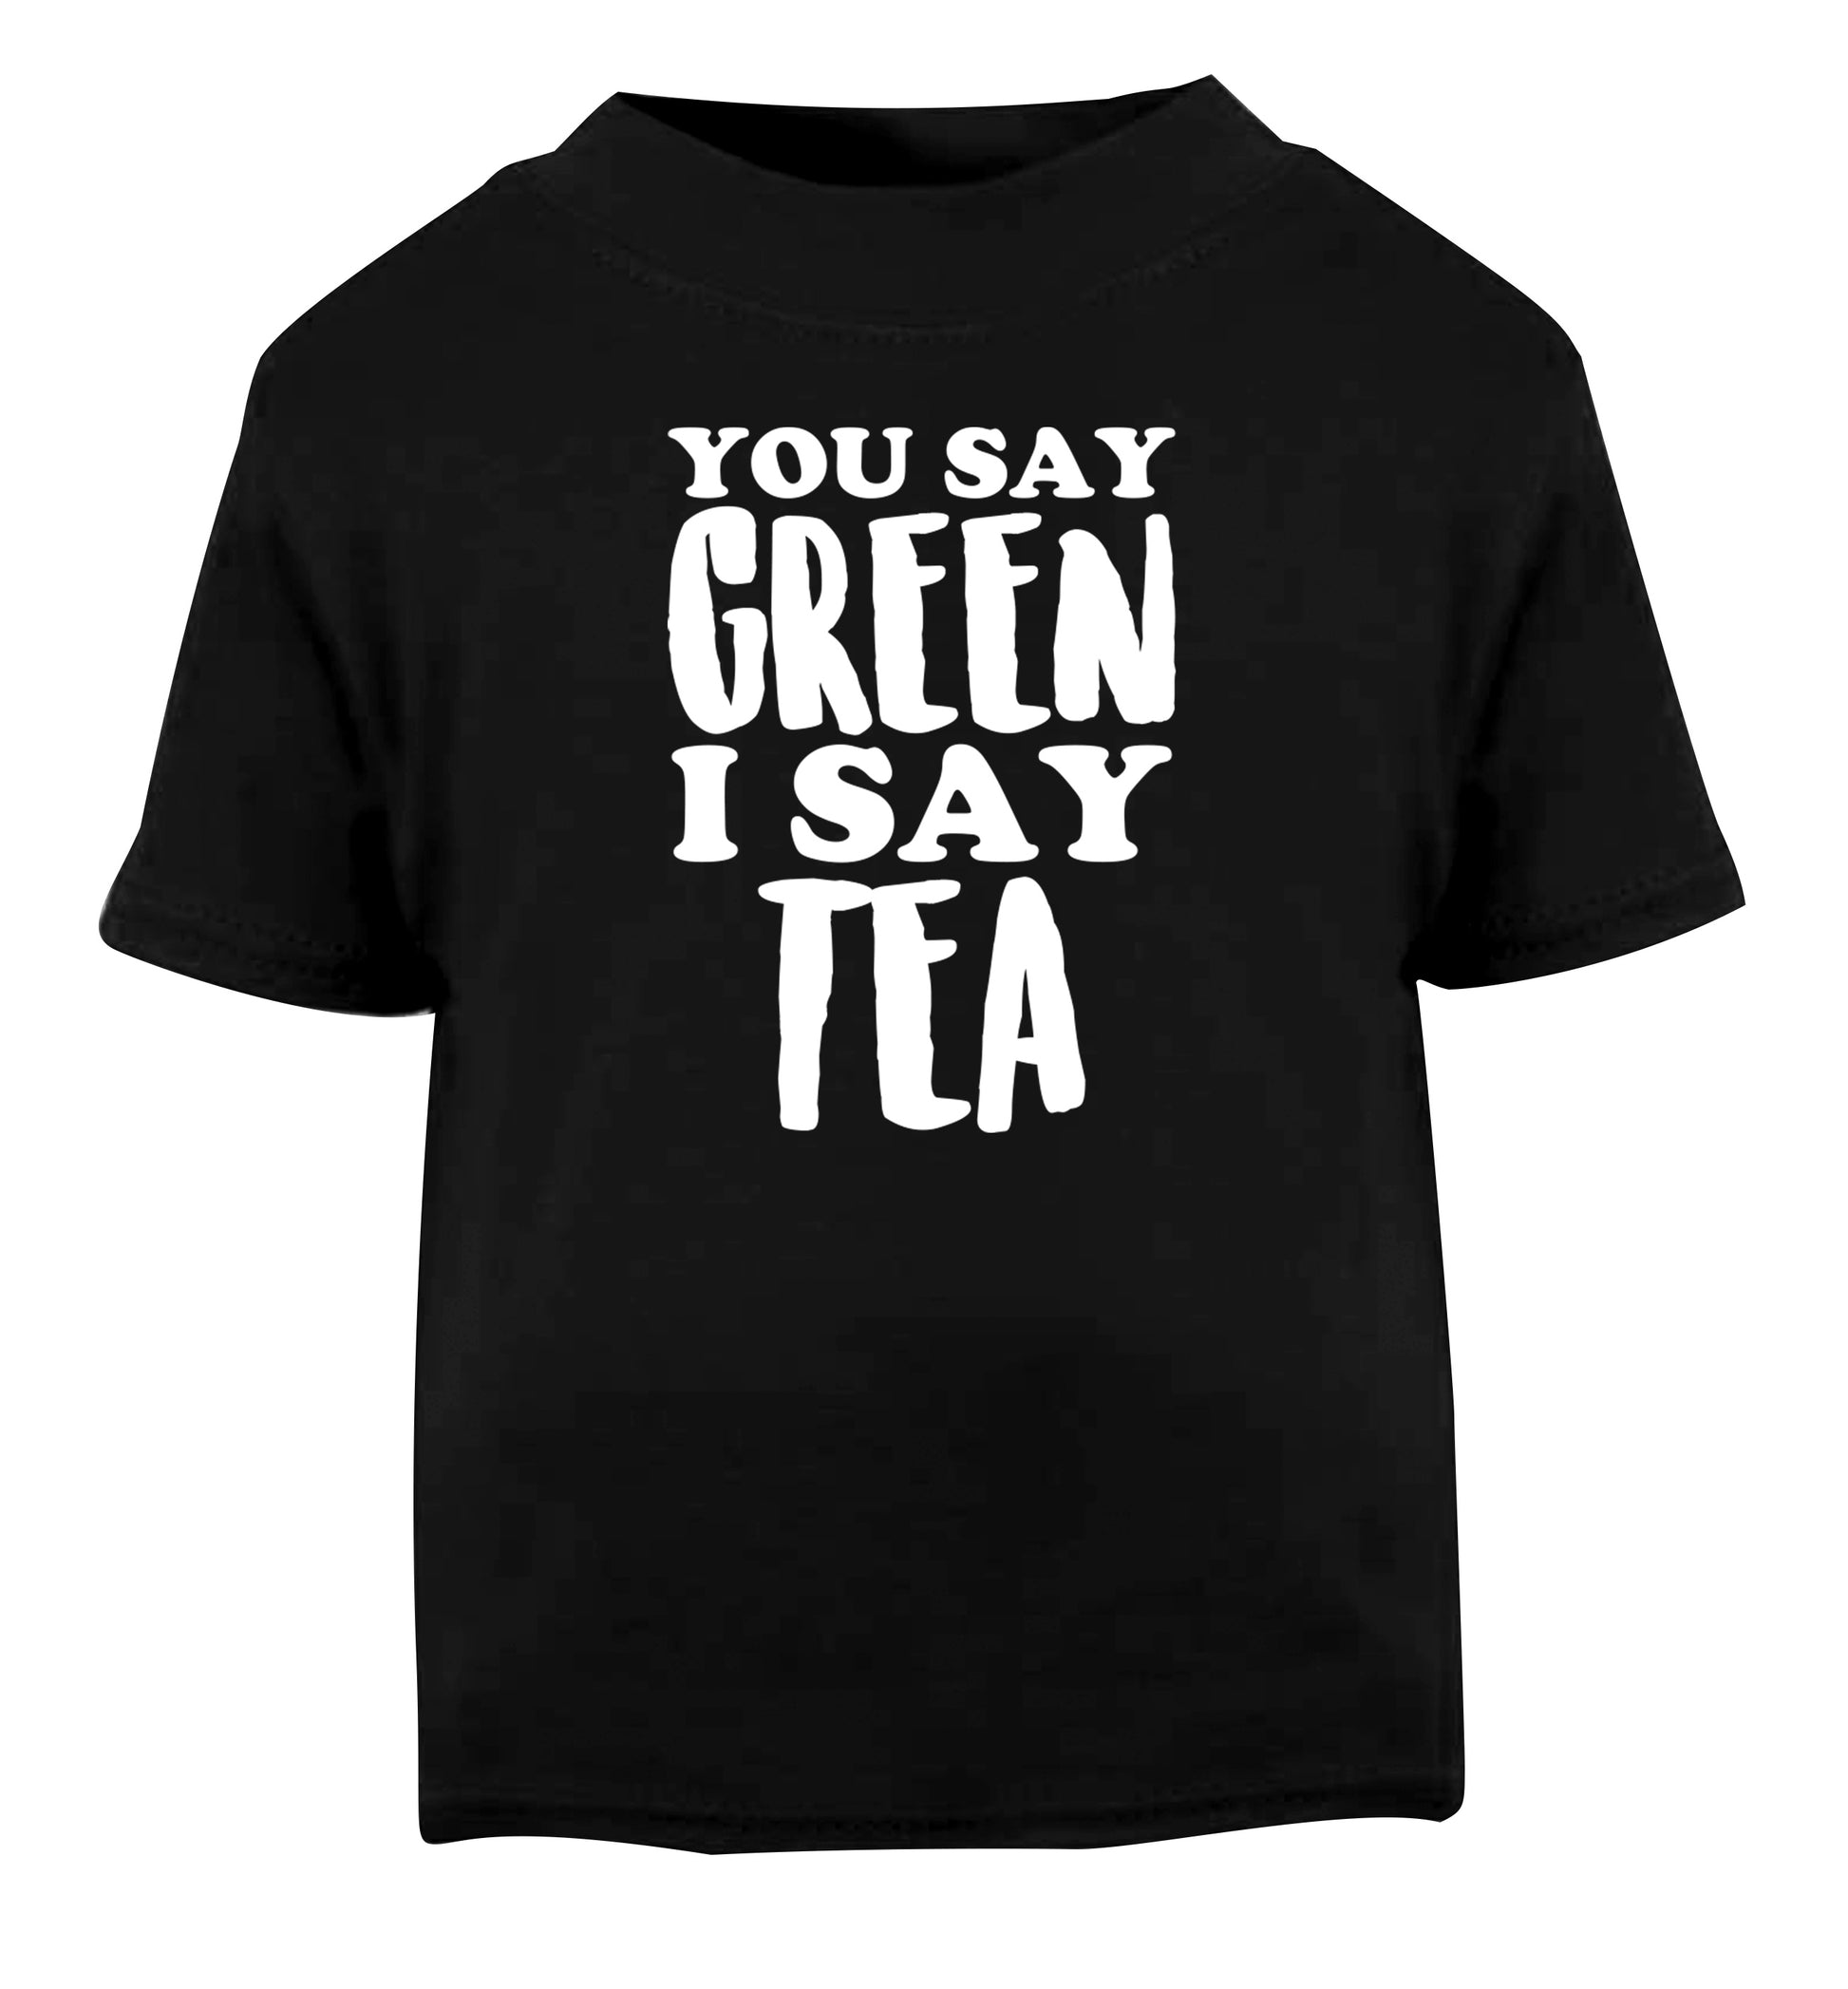 You say green I say tea! Black Baby Toddler Tshirt 2 years